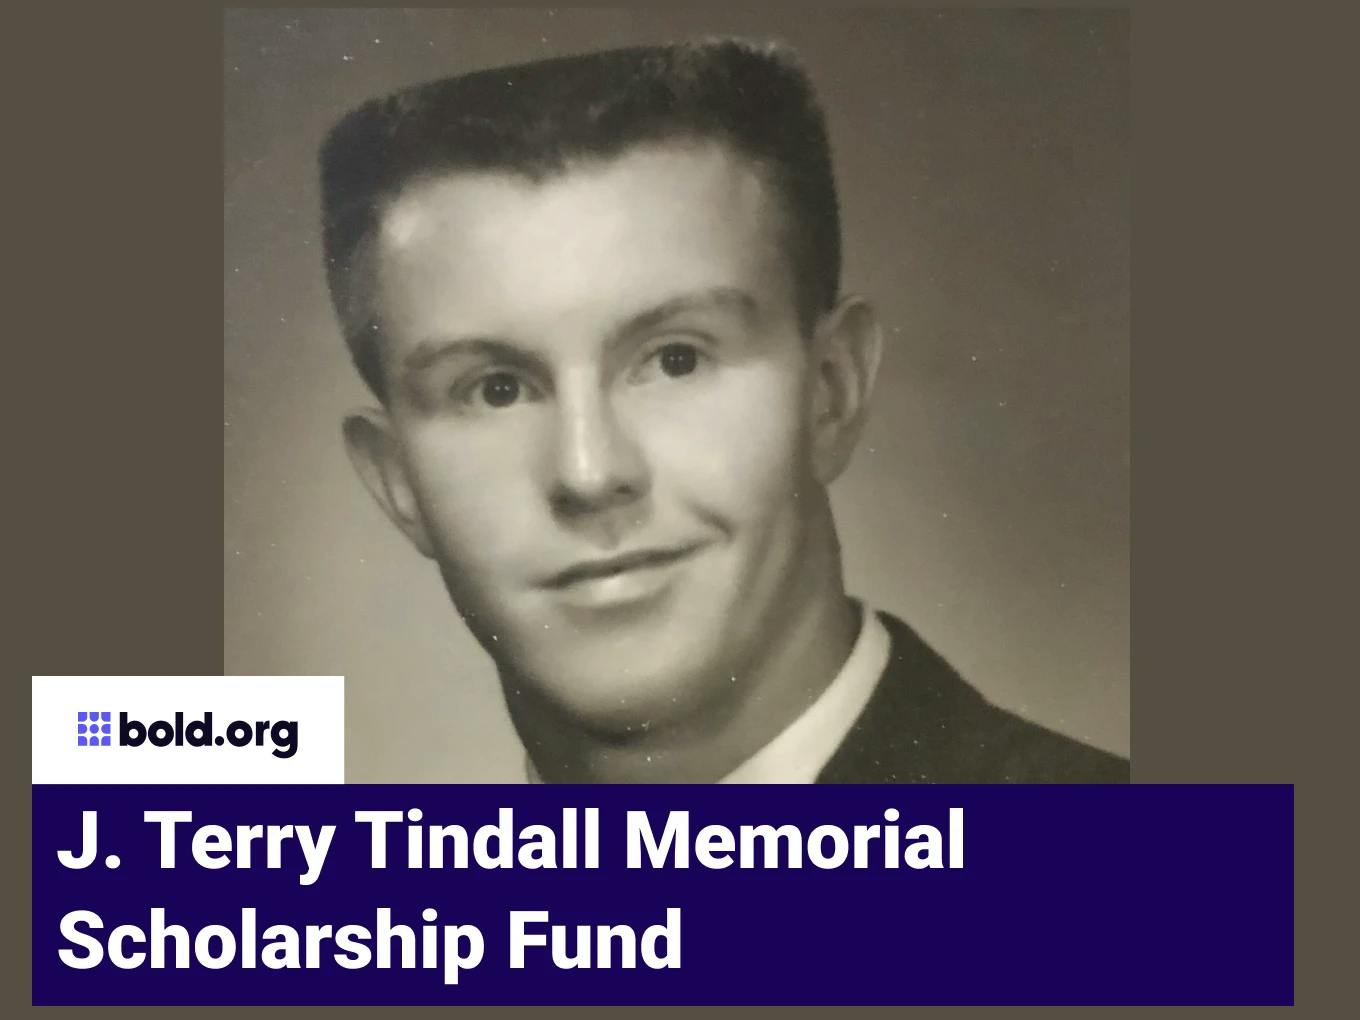 J. Terry Tindall Memorial Scholarship Fund